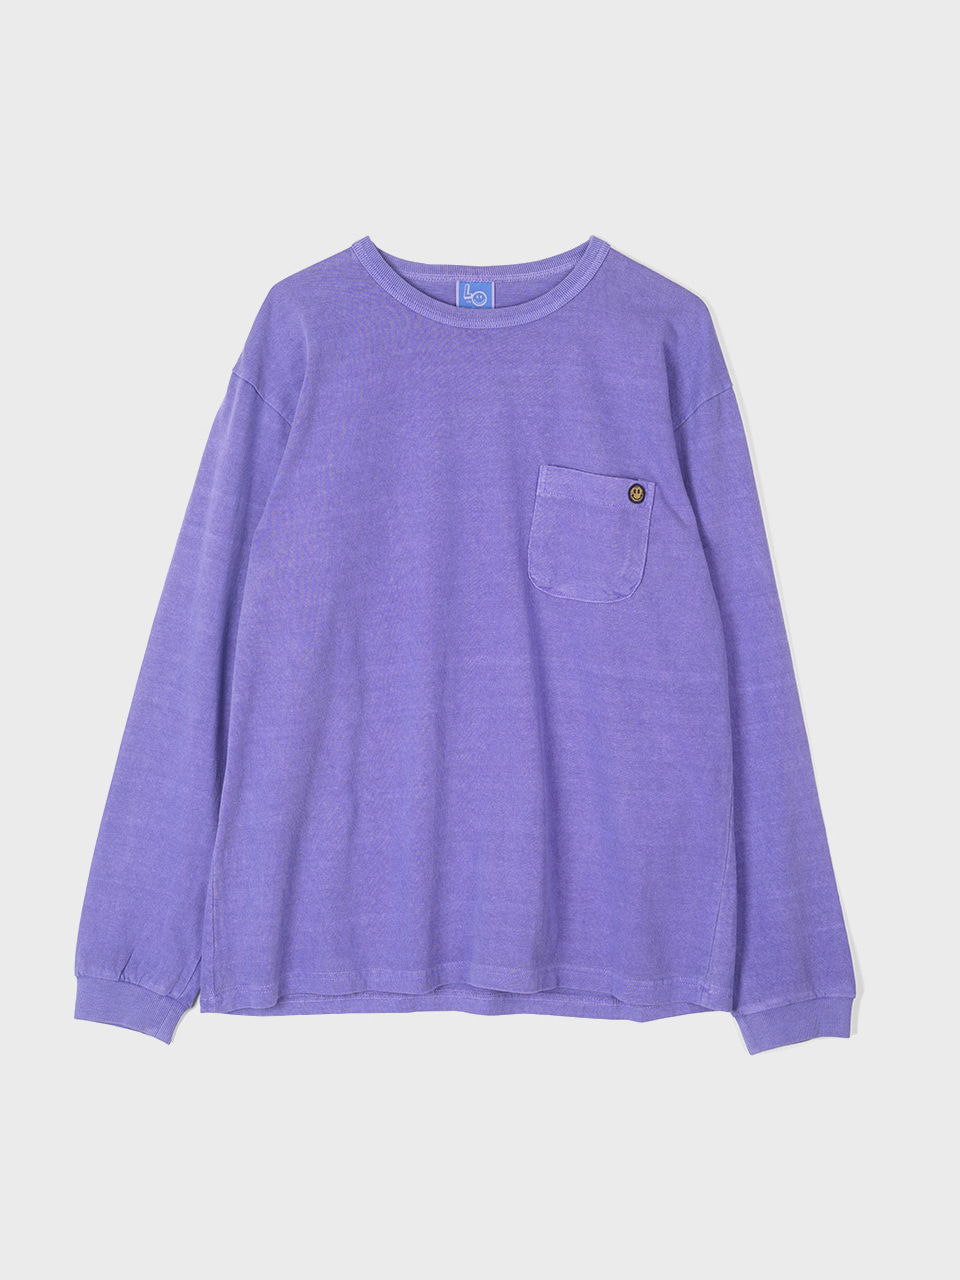 LOCALS ONLY Garment Dyed Pocket L/S &quot;Purple&quot;